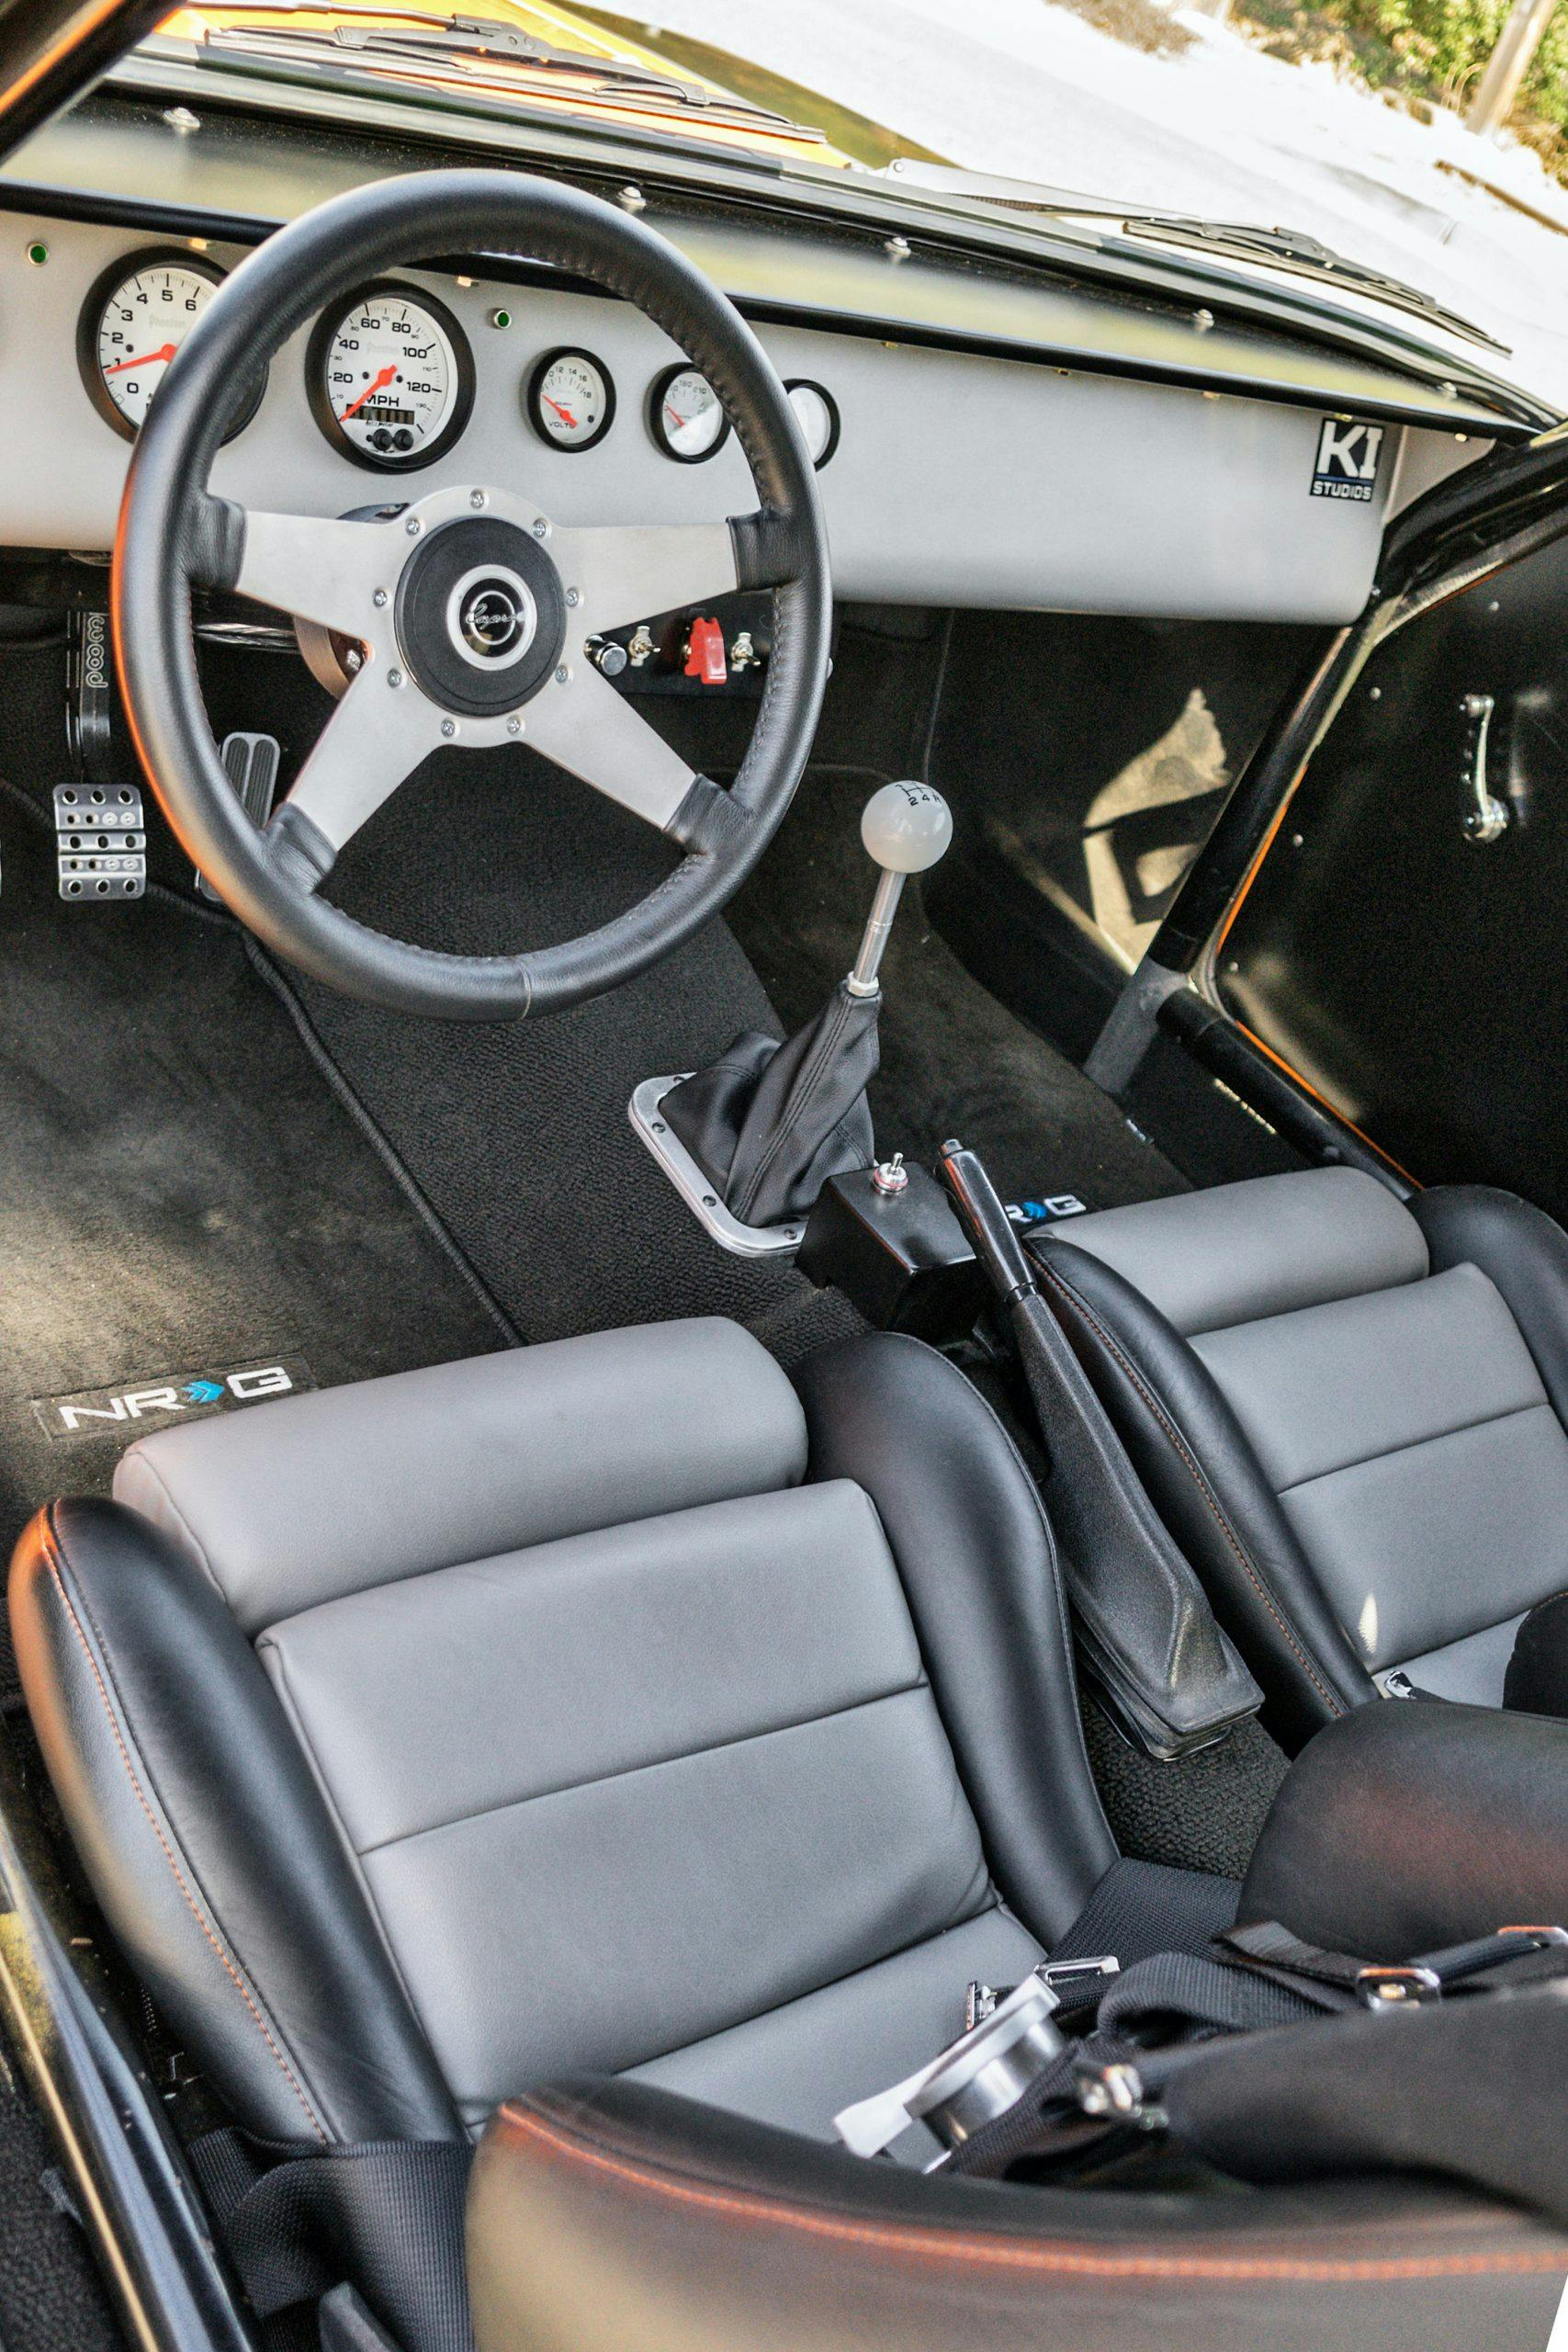 1974 Mk I Ford Capri restomod interior cockpit